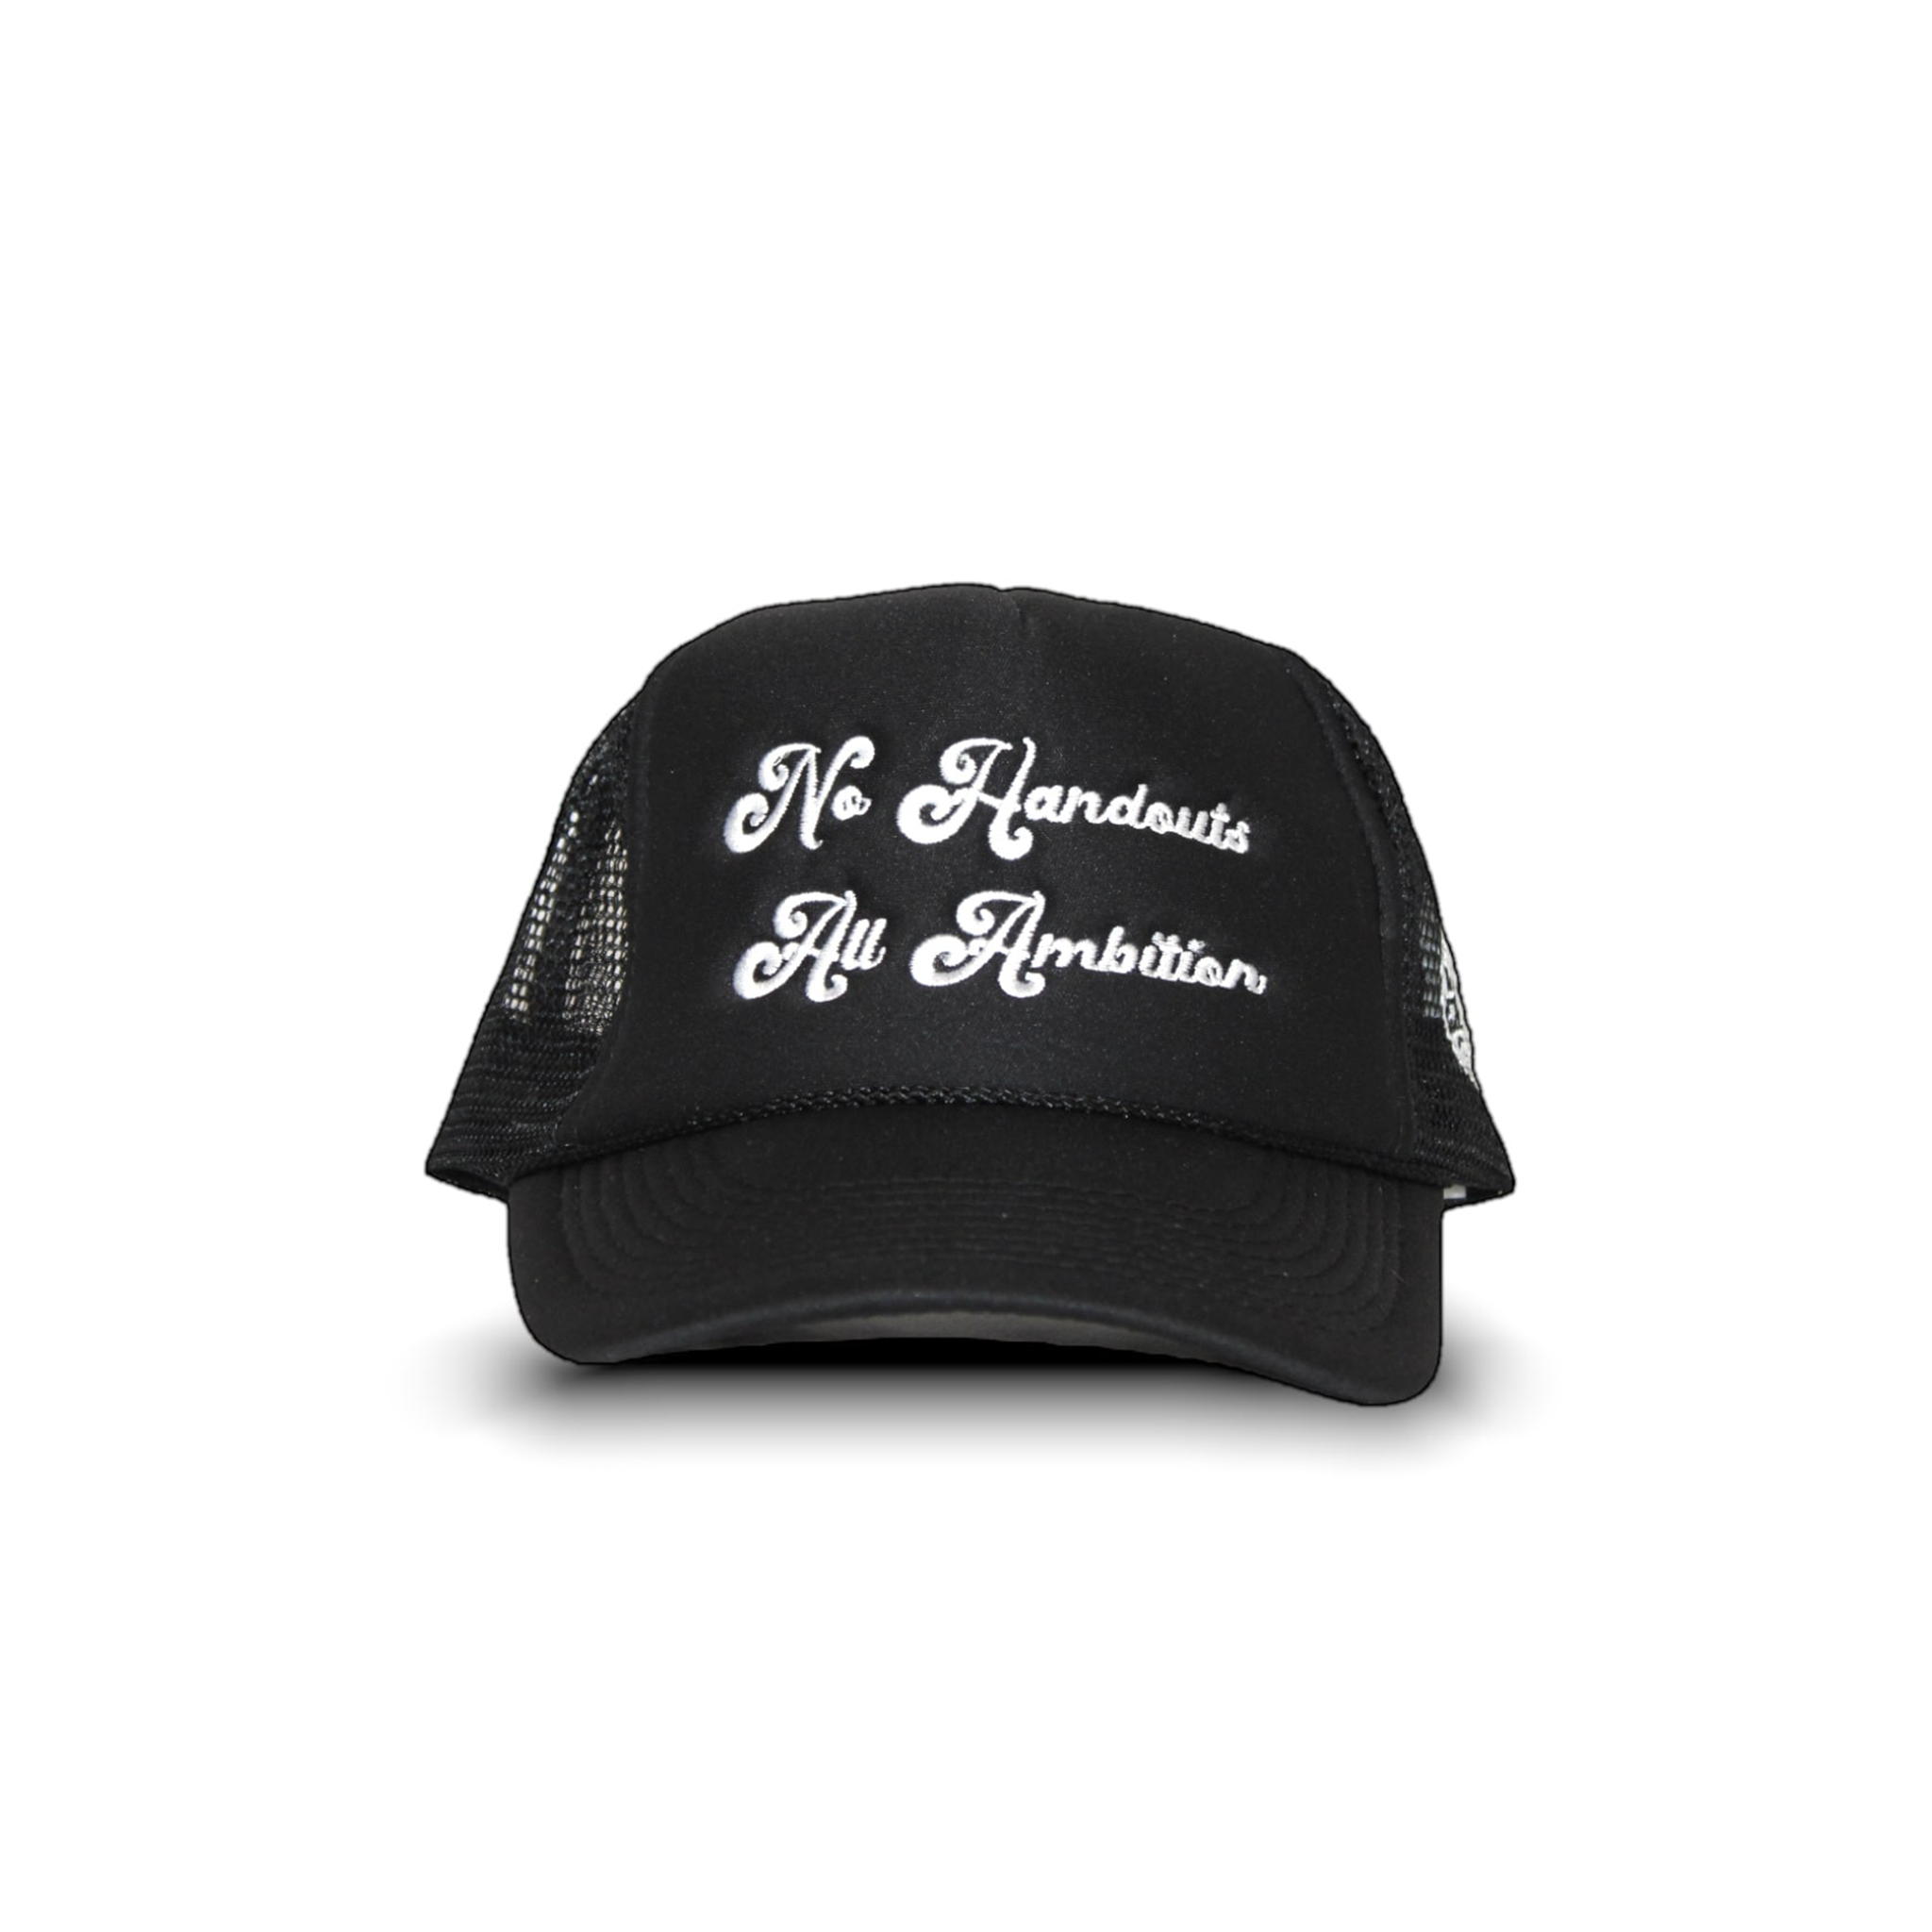 'All Ambition' Trucker Hat in Black